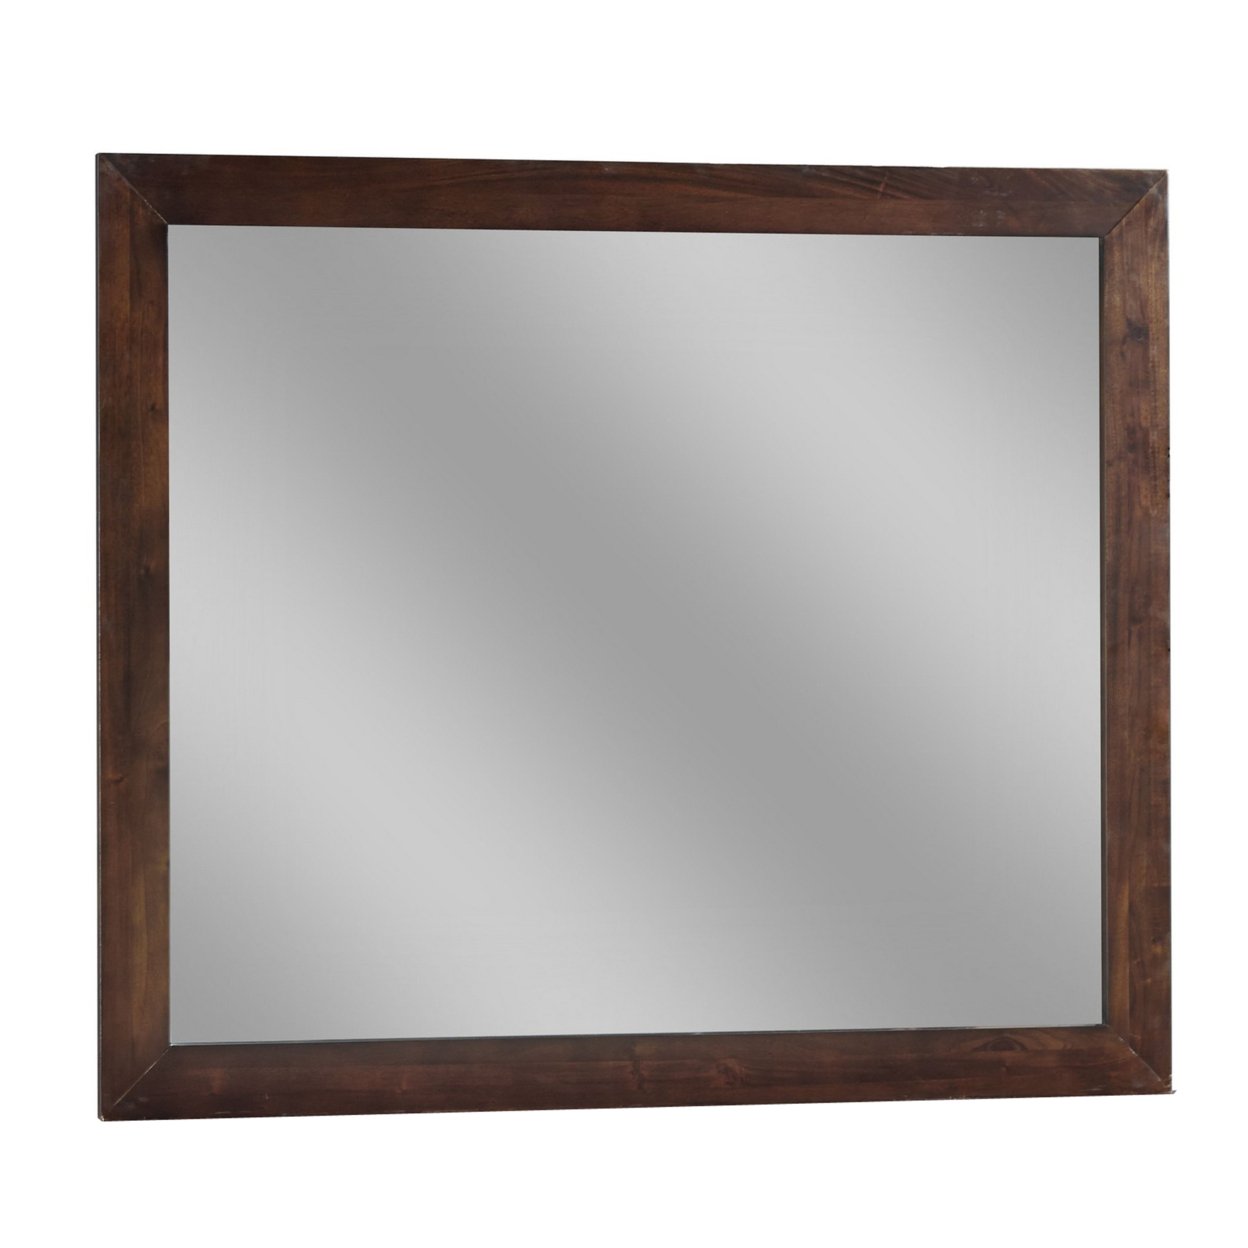 Rustic Style Rectangular Wooden Frame Dresser Mirror, Brown- Saltoro Sherpi